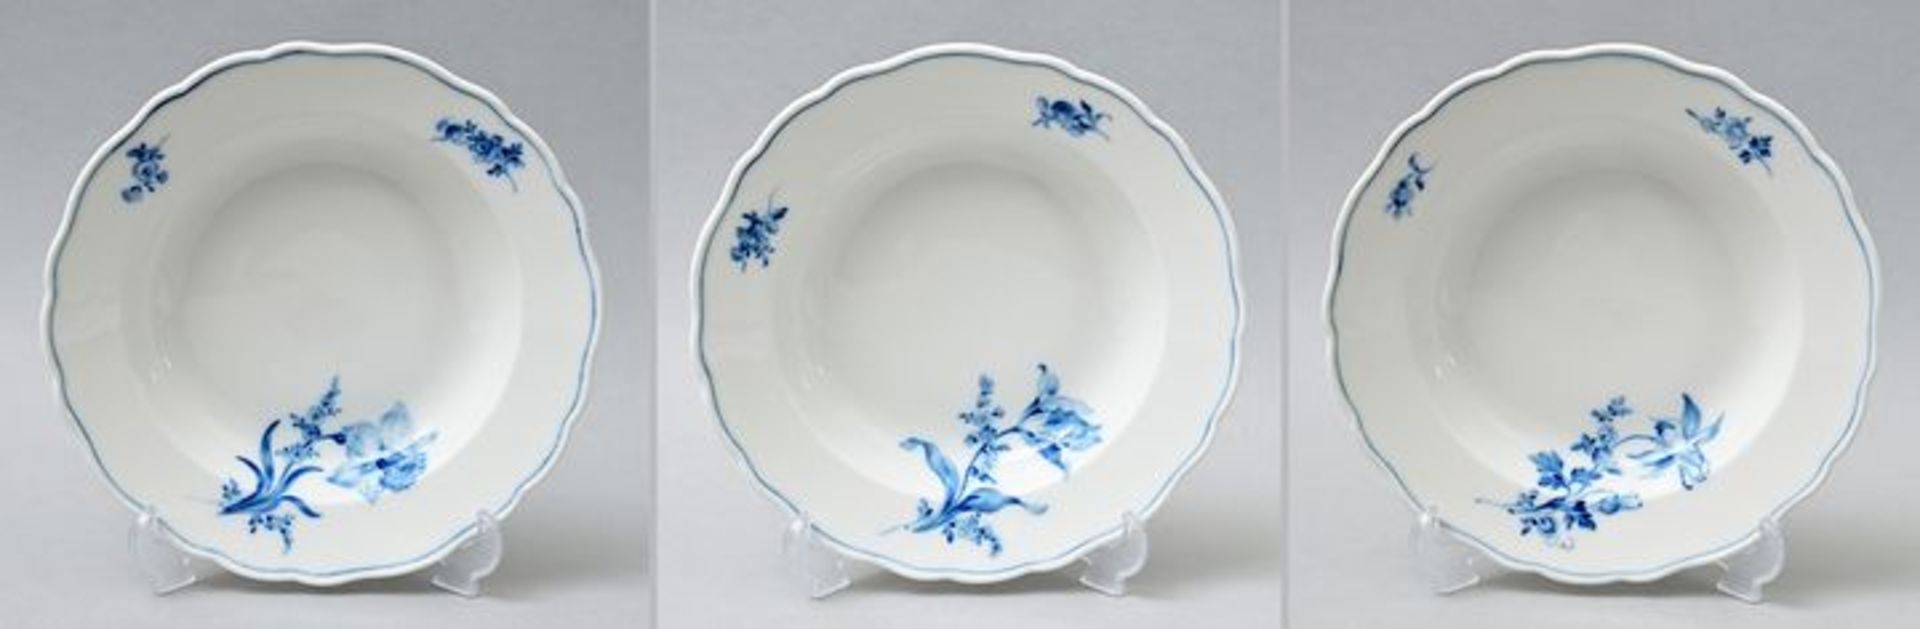 Suppenteller blaue Blume/ soup plates